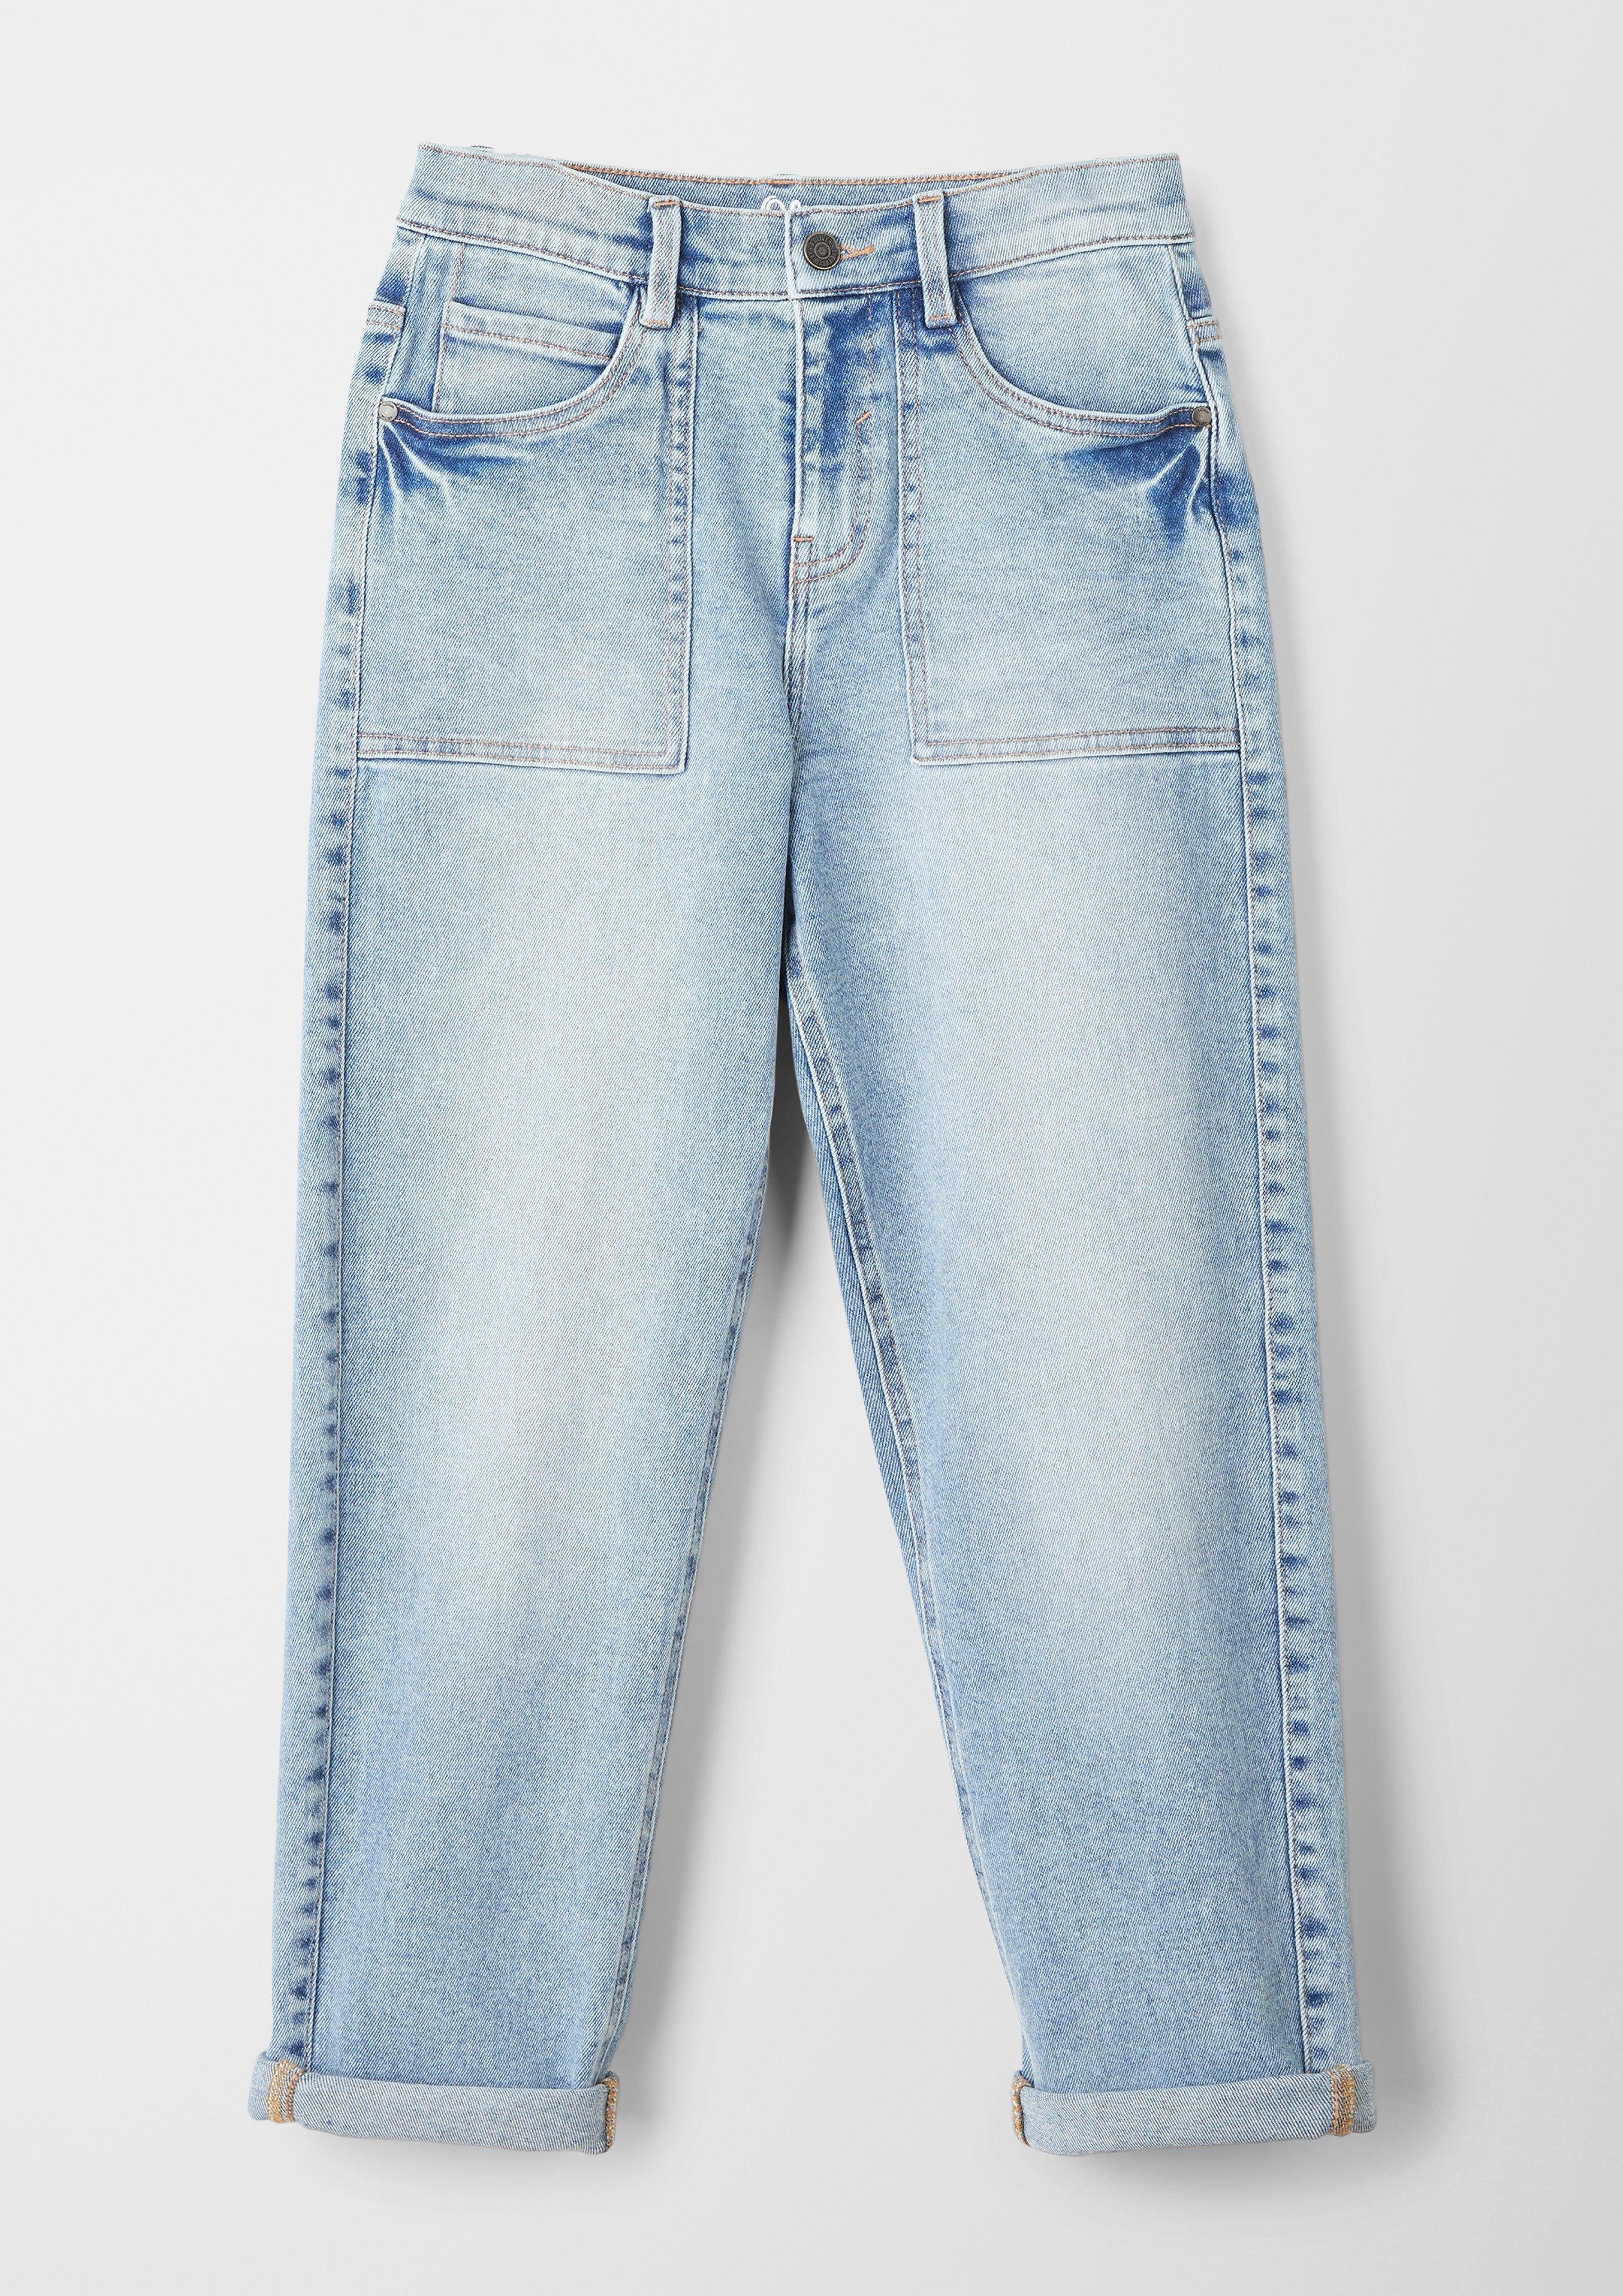 Dies ist eine Liste von s.Oliver 5-Pocket-Jeans Jeans / Mid Rise / Fit Waschung Leg Tapered Relaxed 